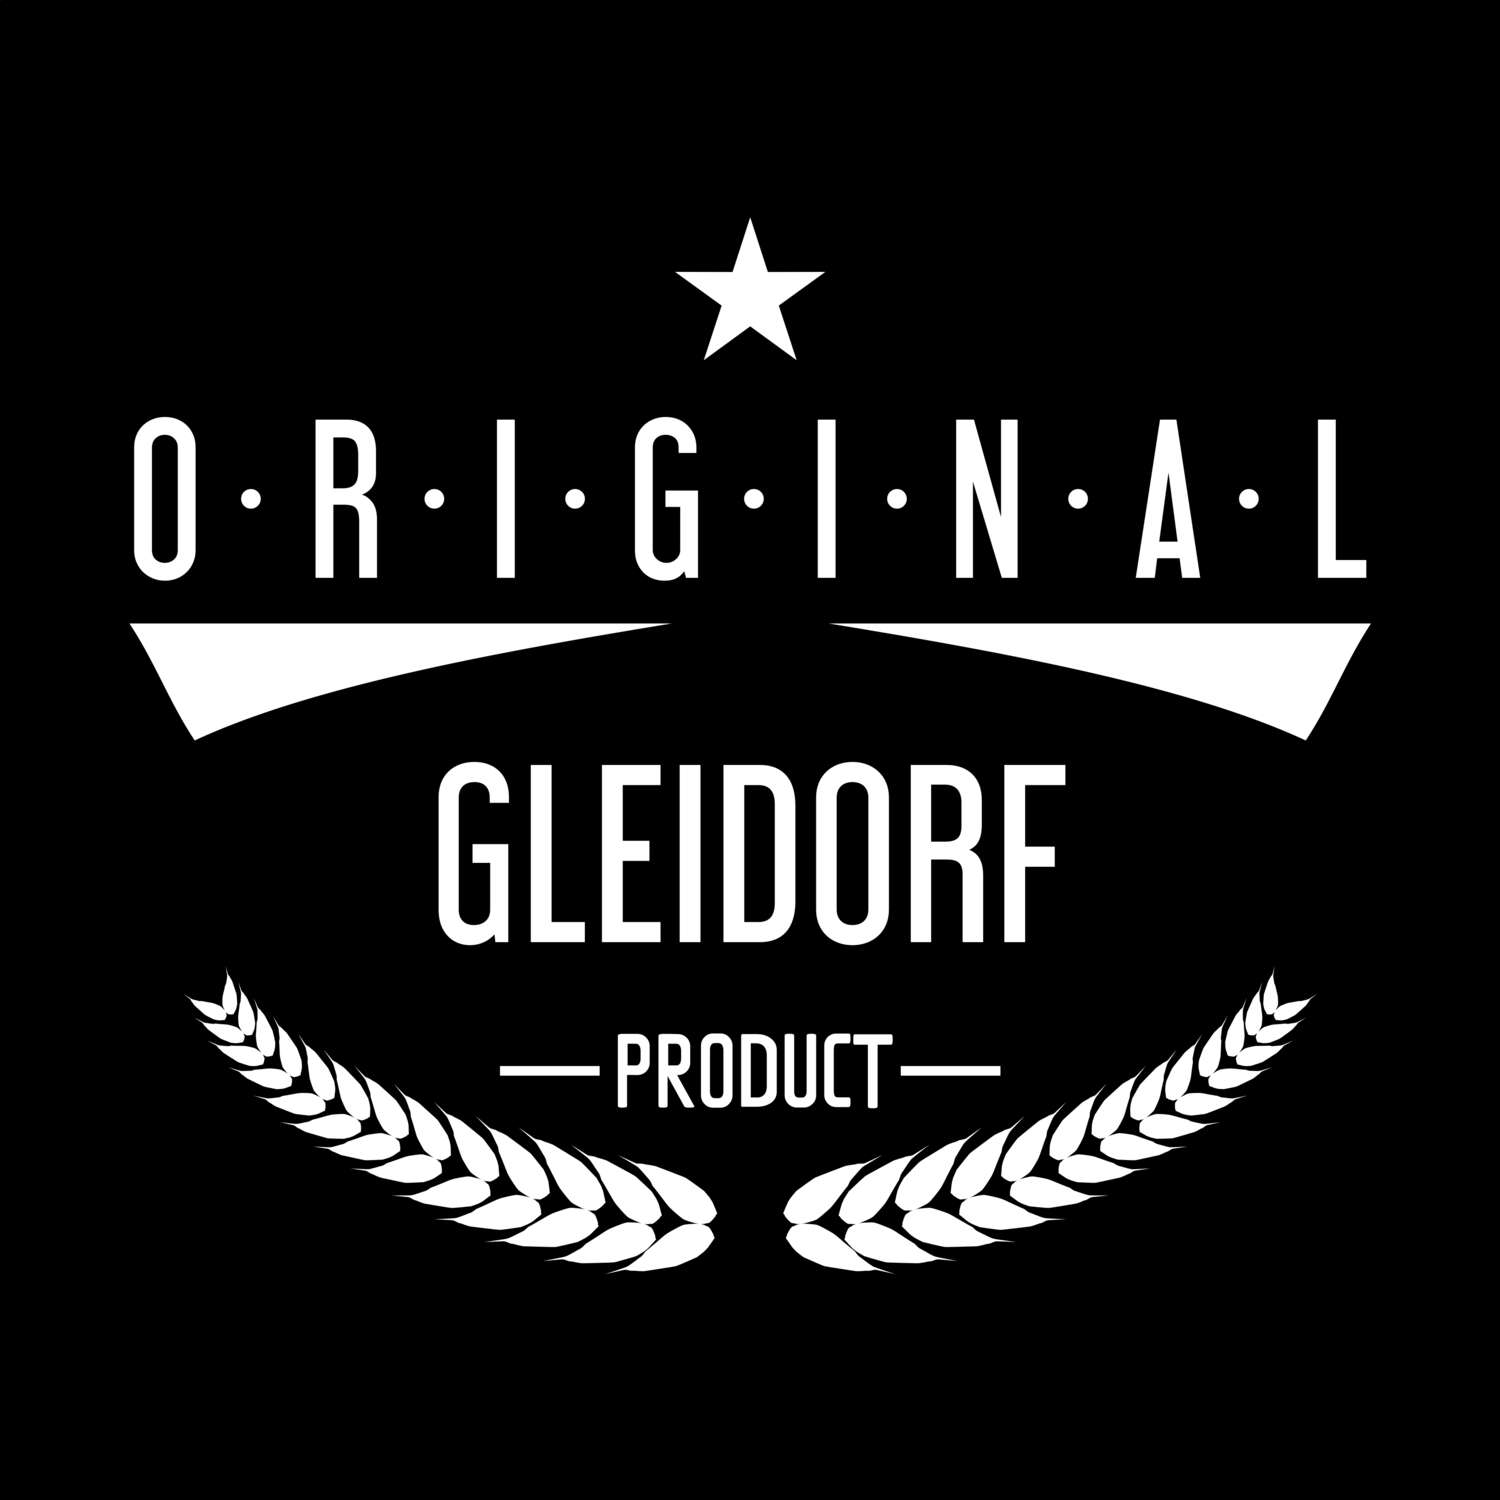 Gleidorf T-Shirt »Original Product«